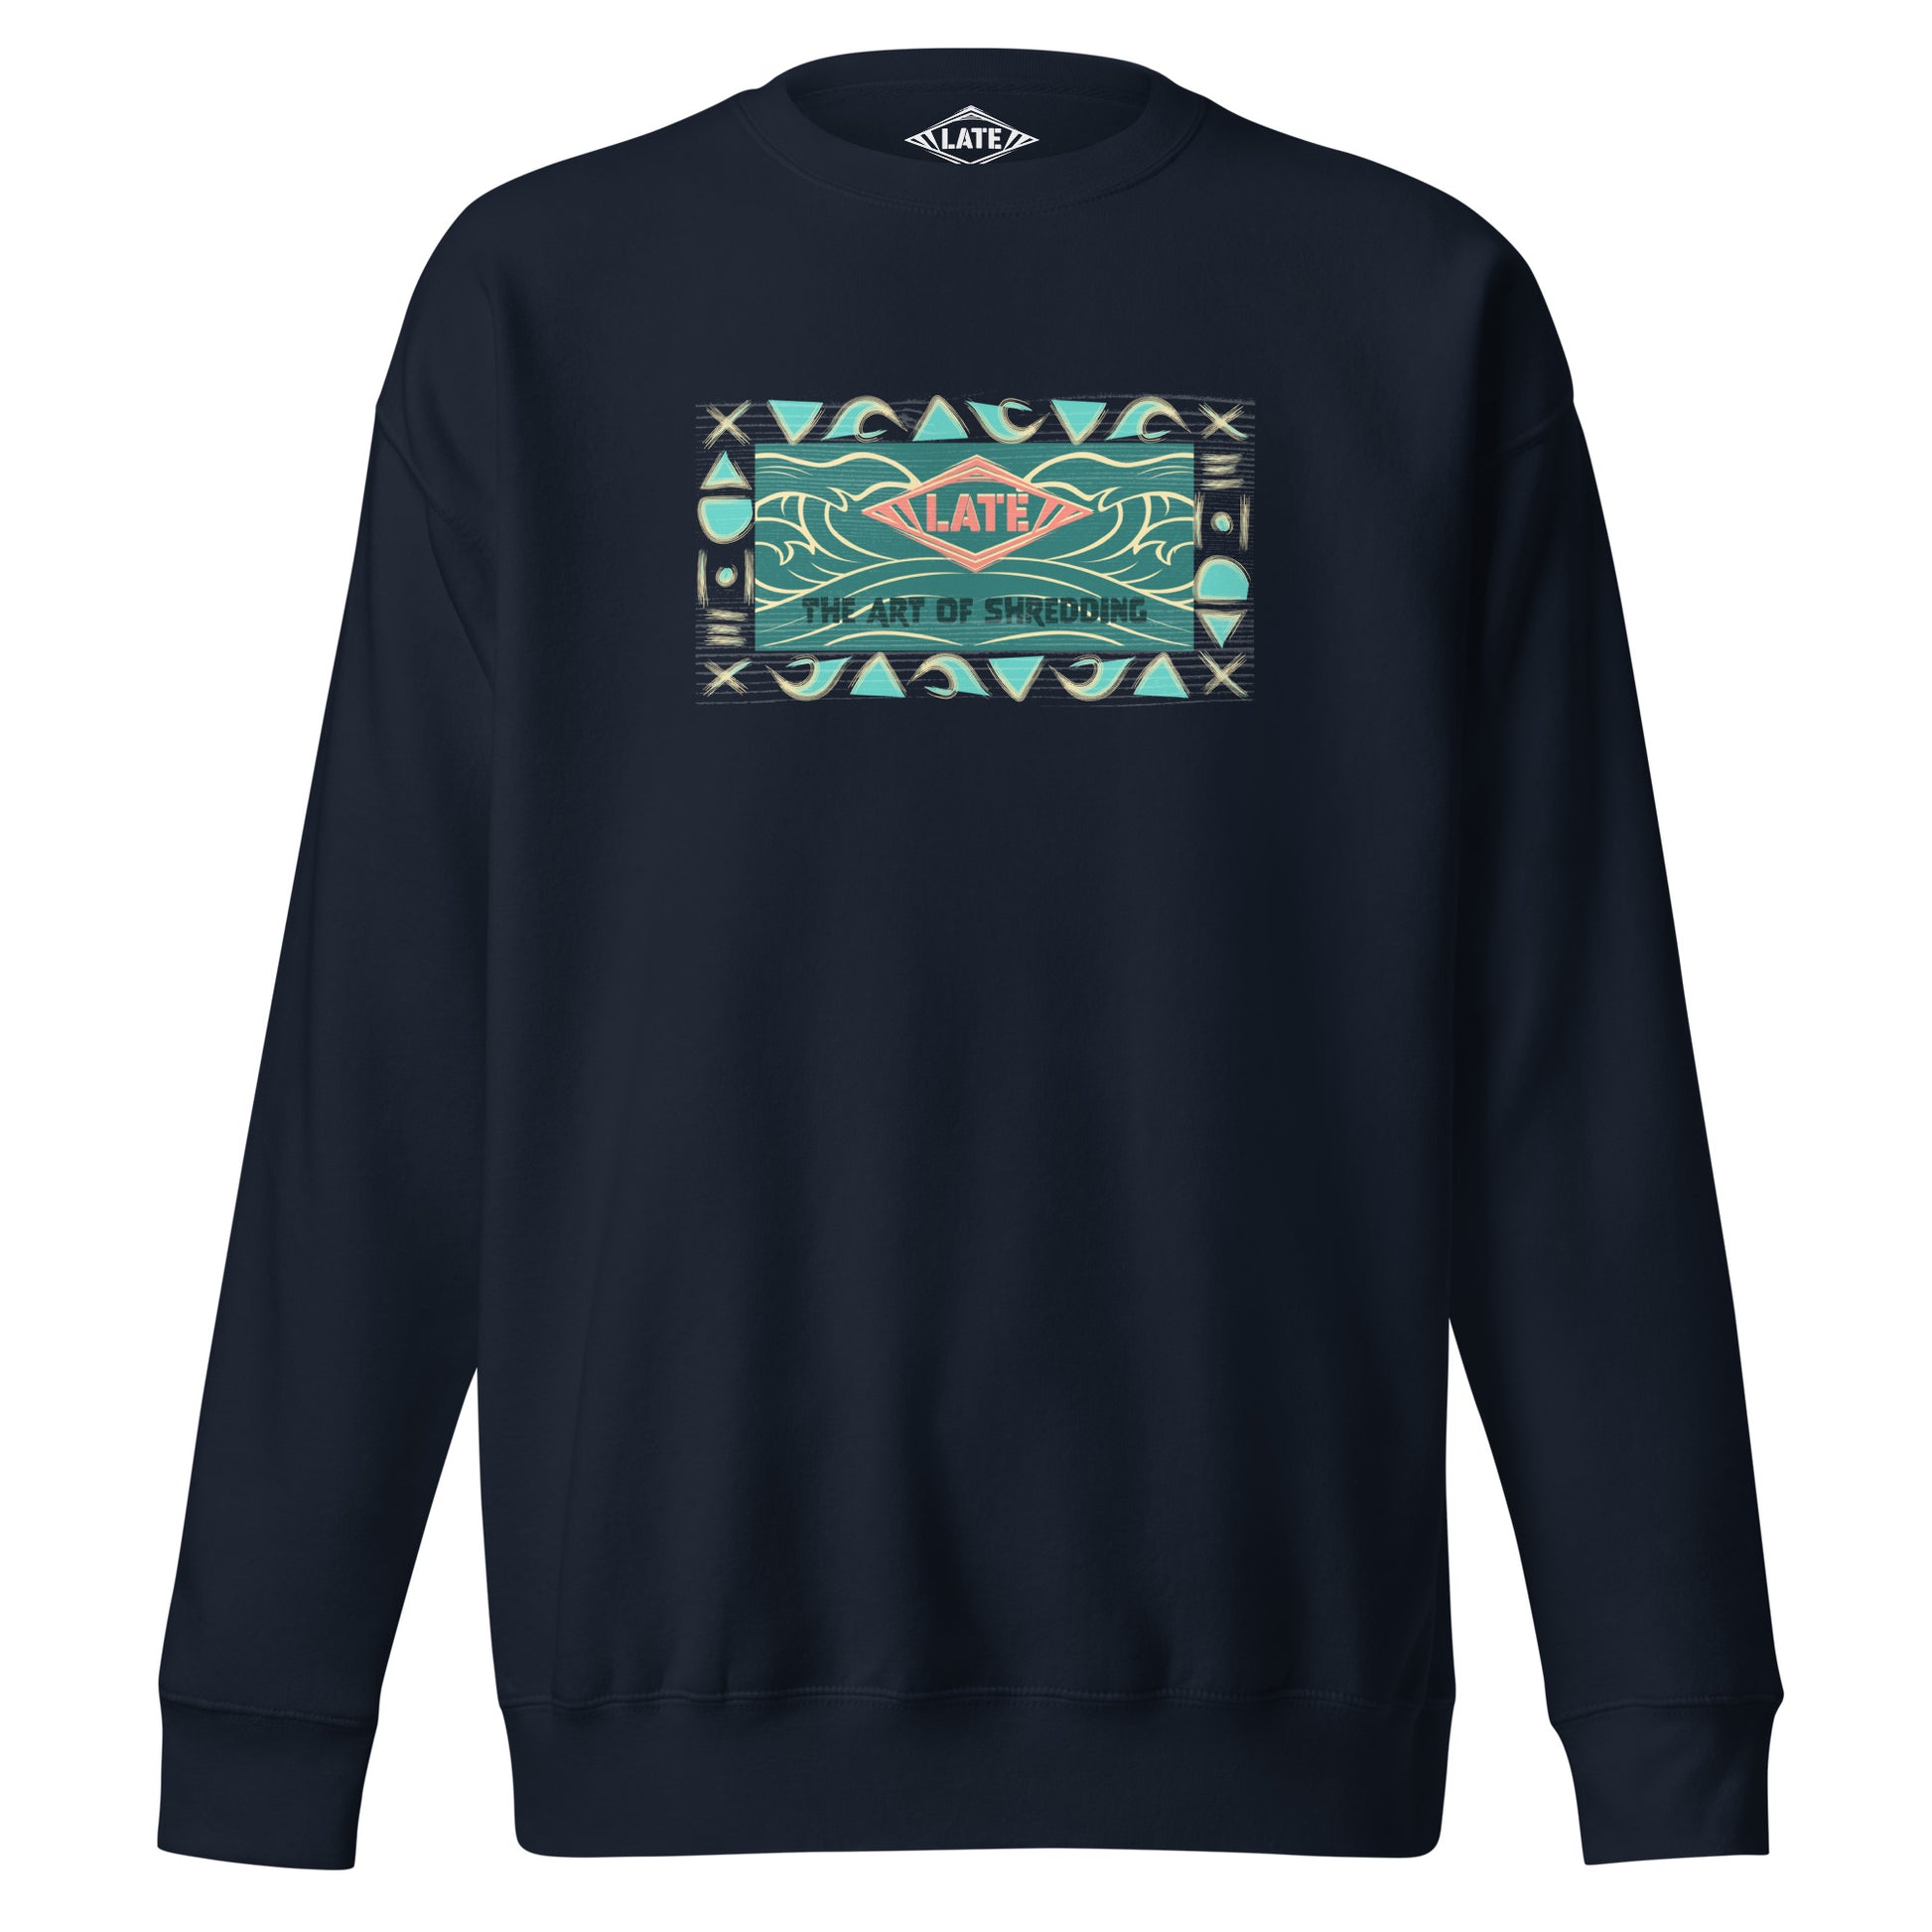 Pull vintage art of shredding, motifs hawaïen vagues, et océan avec le logo surfshop Late, sweatshirt unisex navy